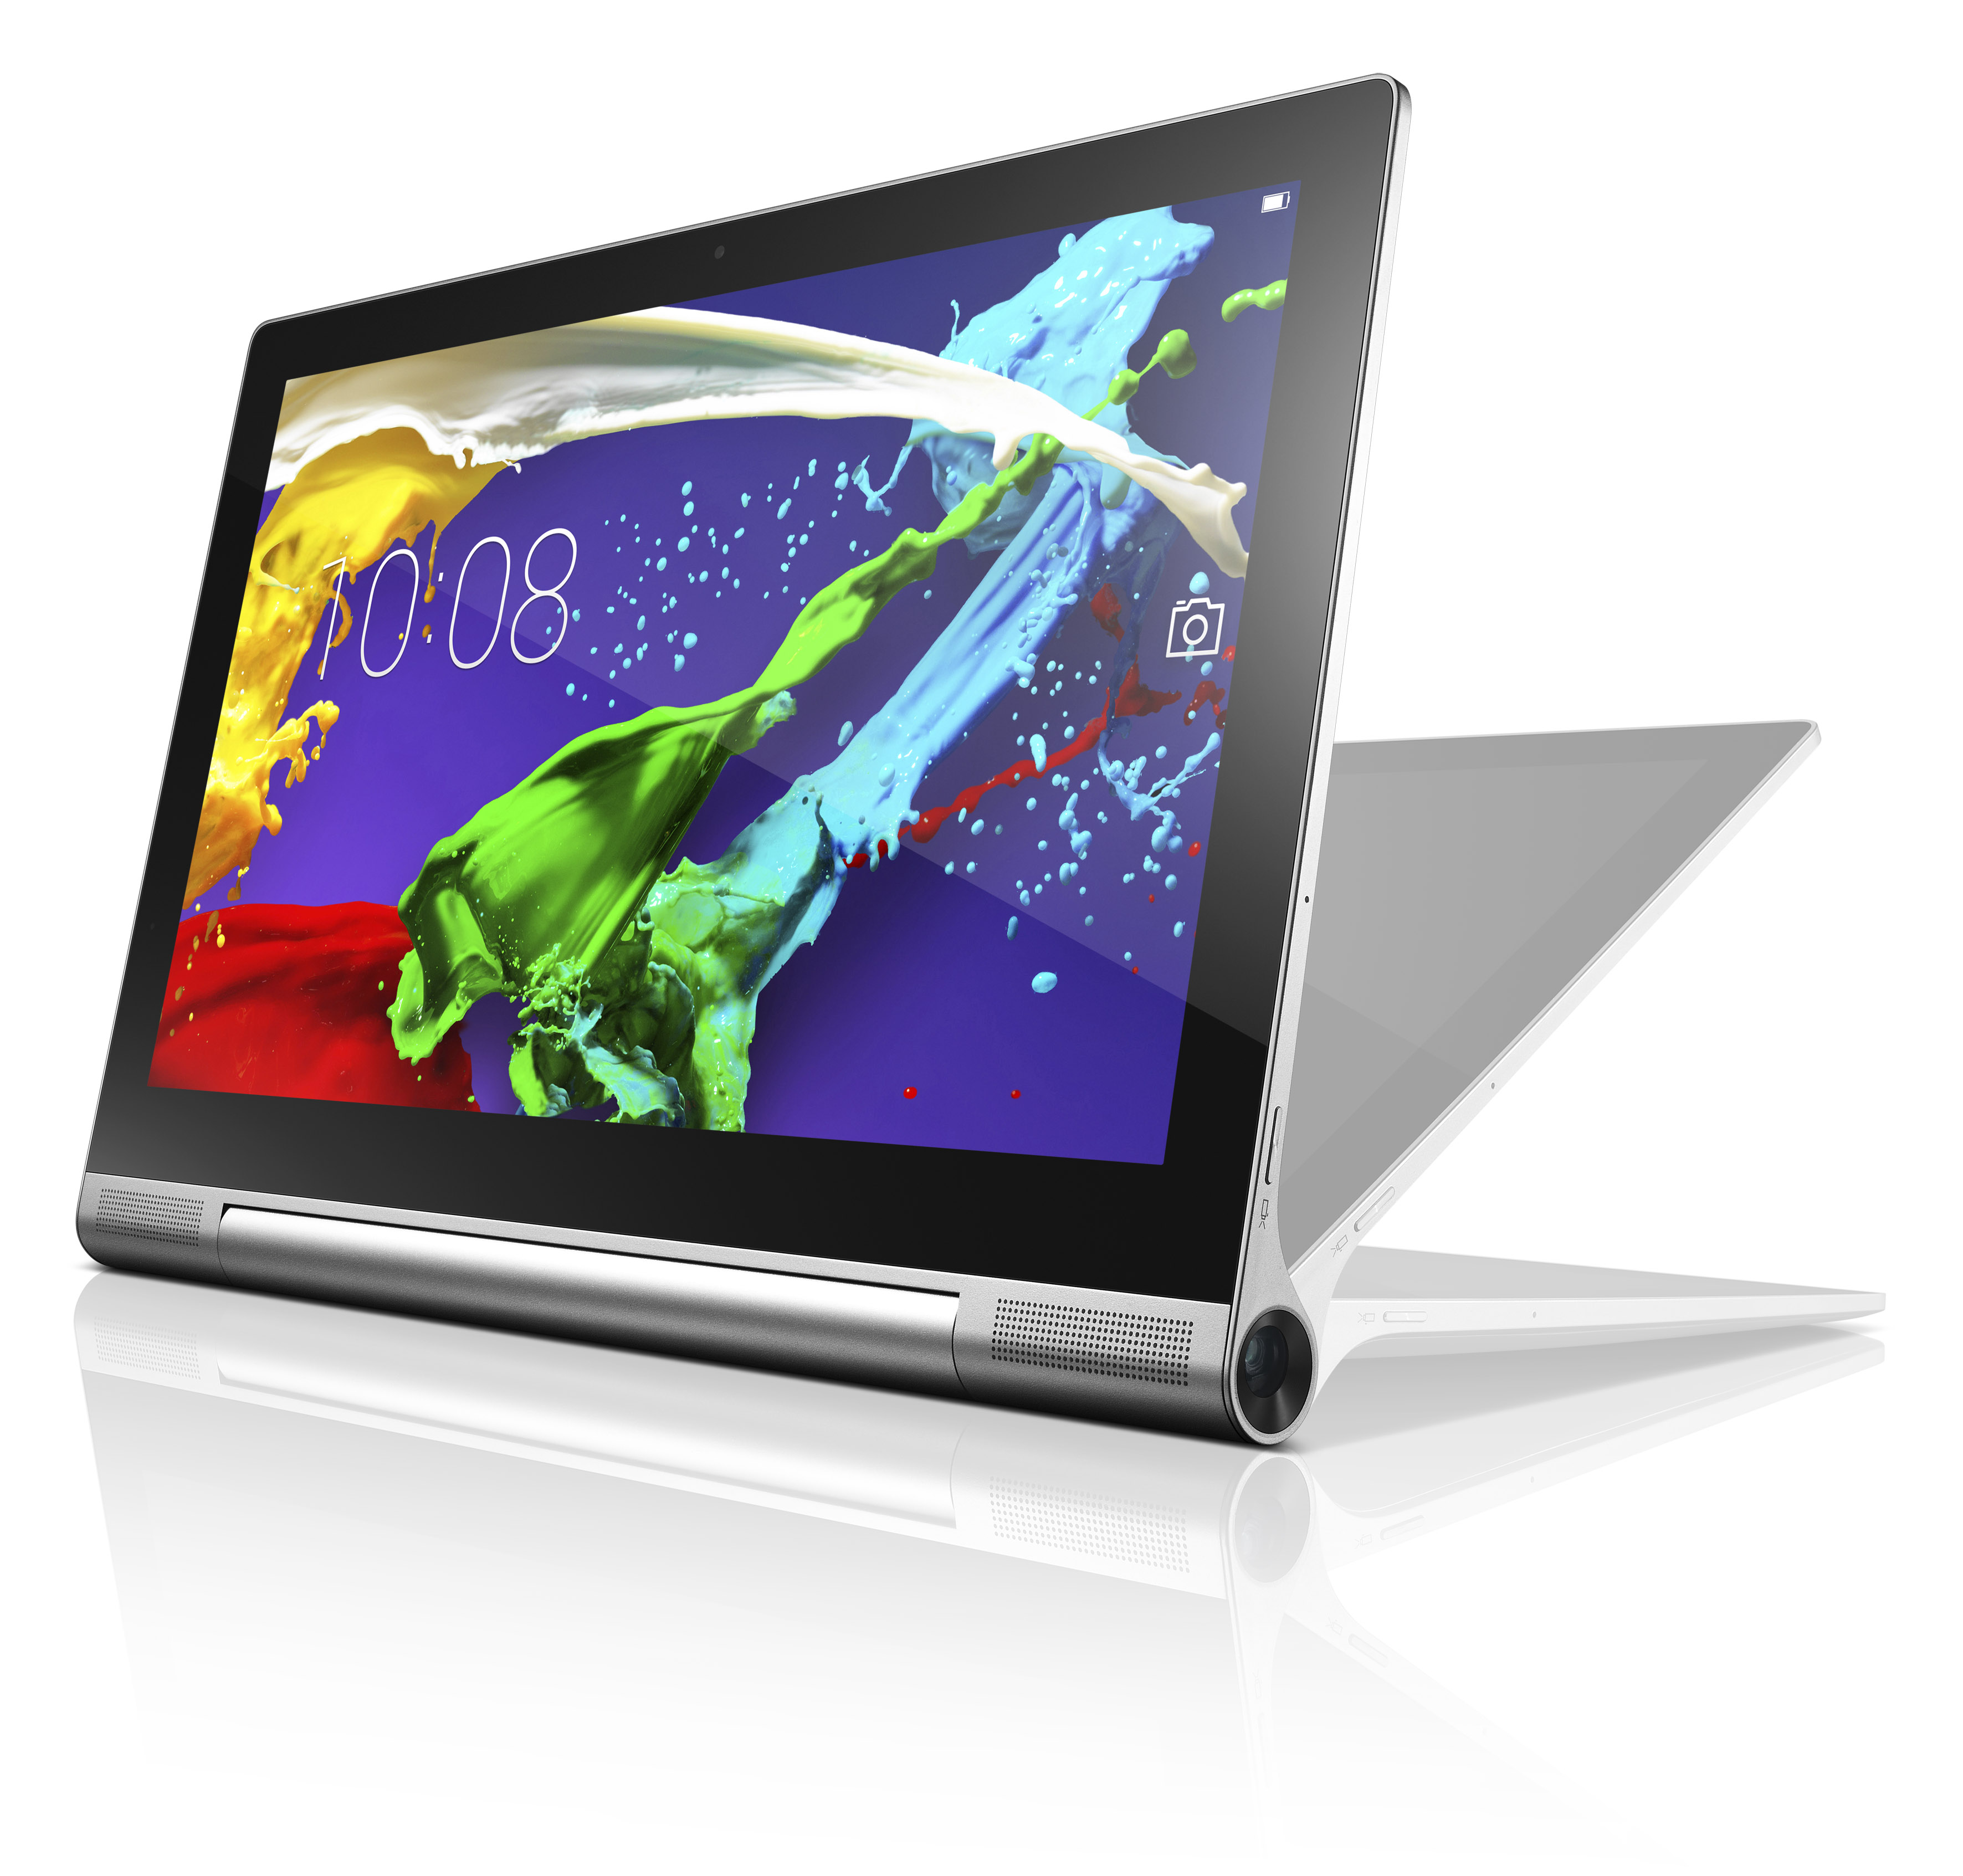 Lenovo Yoga Tablet 2 Pro Review - NotebookCheck.net Reviews